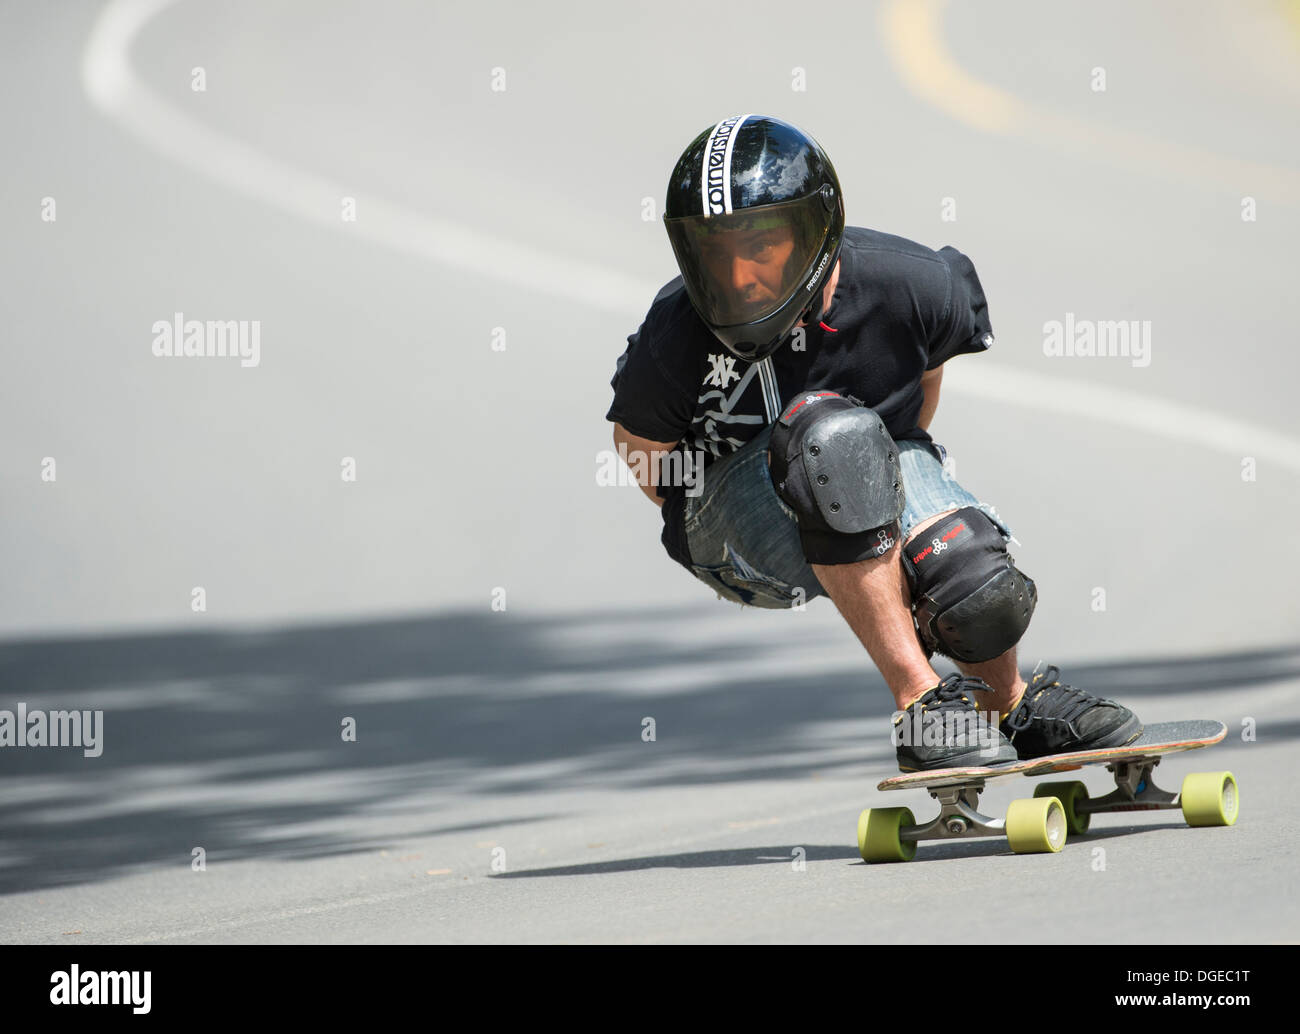 Longboard helmet -Fotos und -Bildmaterial in hoher Auflösung – Alamy